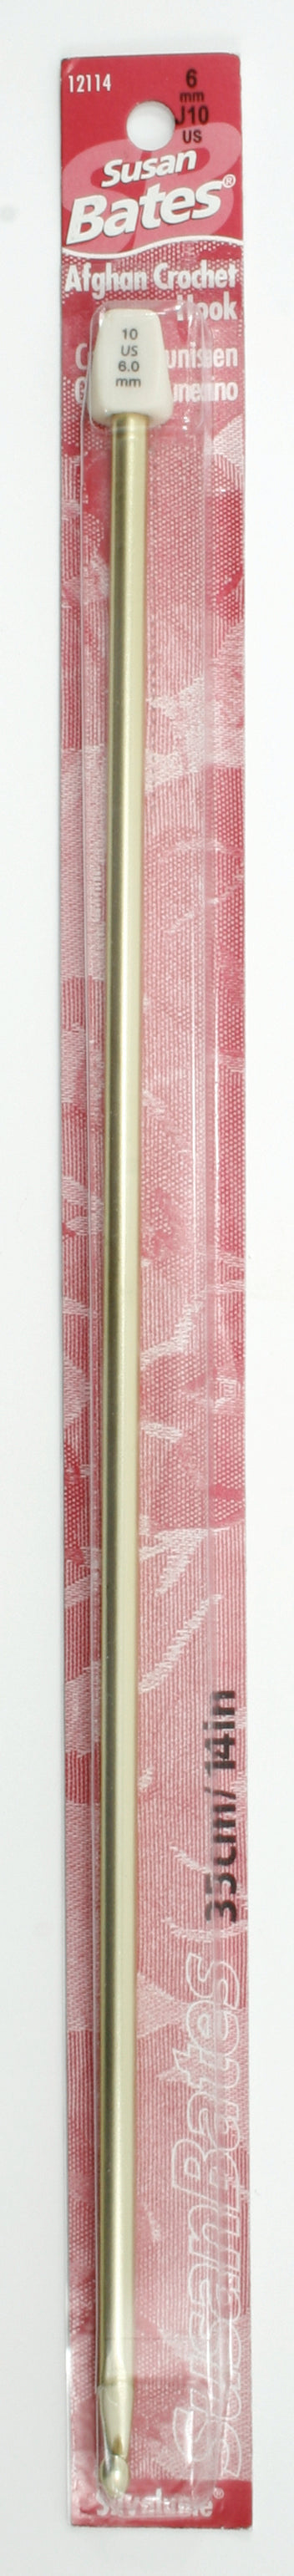 Crochet tunisien SB Silvalume 14 po, 6mm, J-10